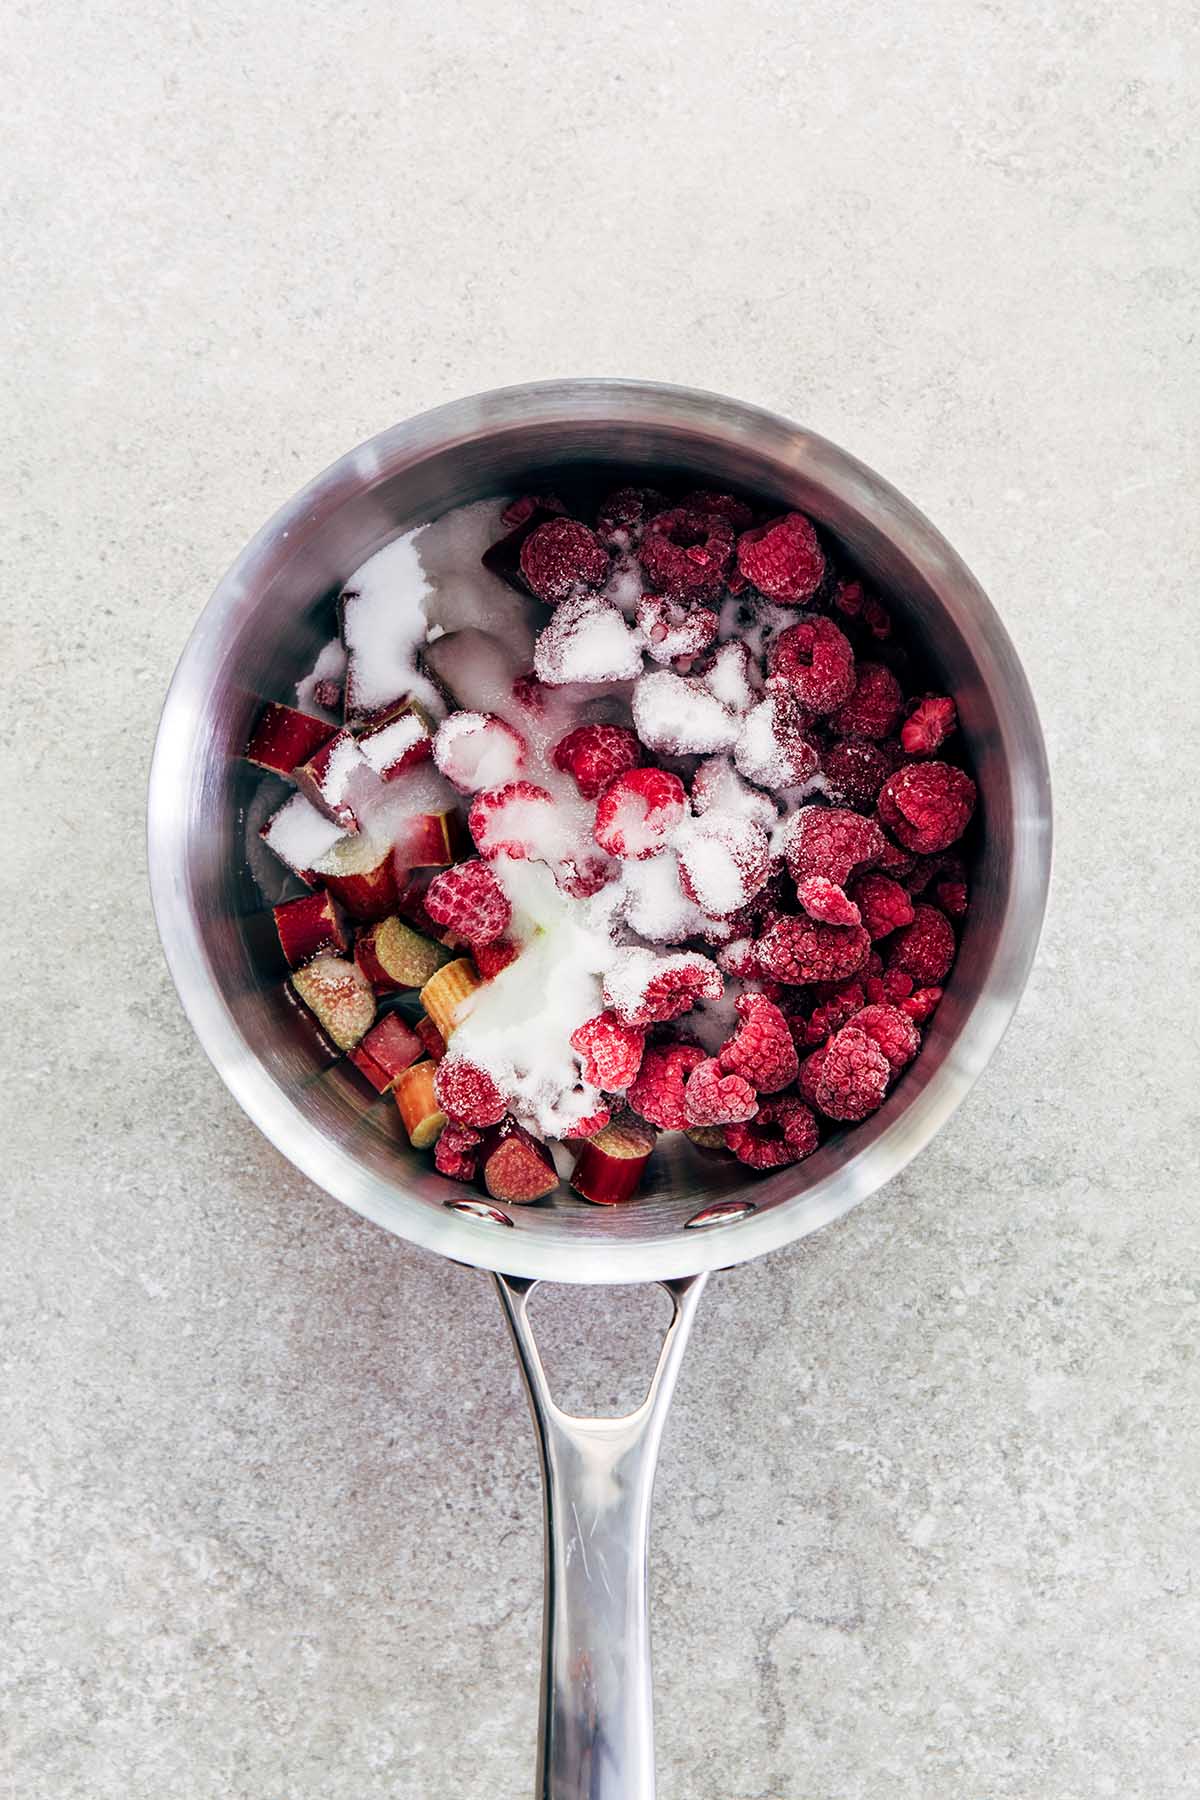 Rhubarb, raspberries, sugar, salt, and lemon juice in a small silver pot from overhead.